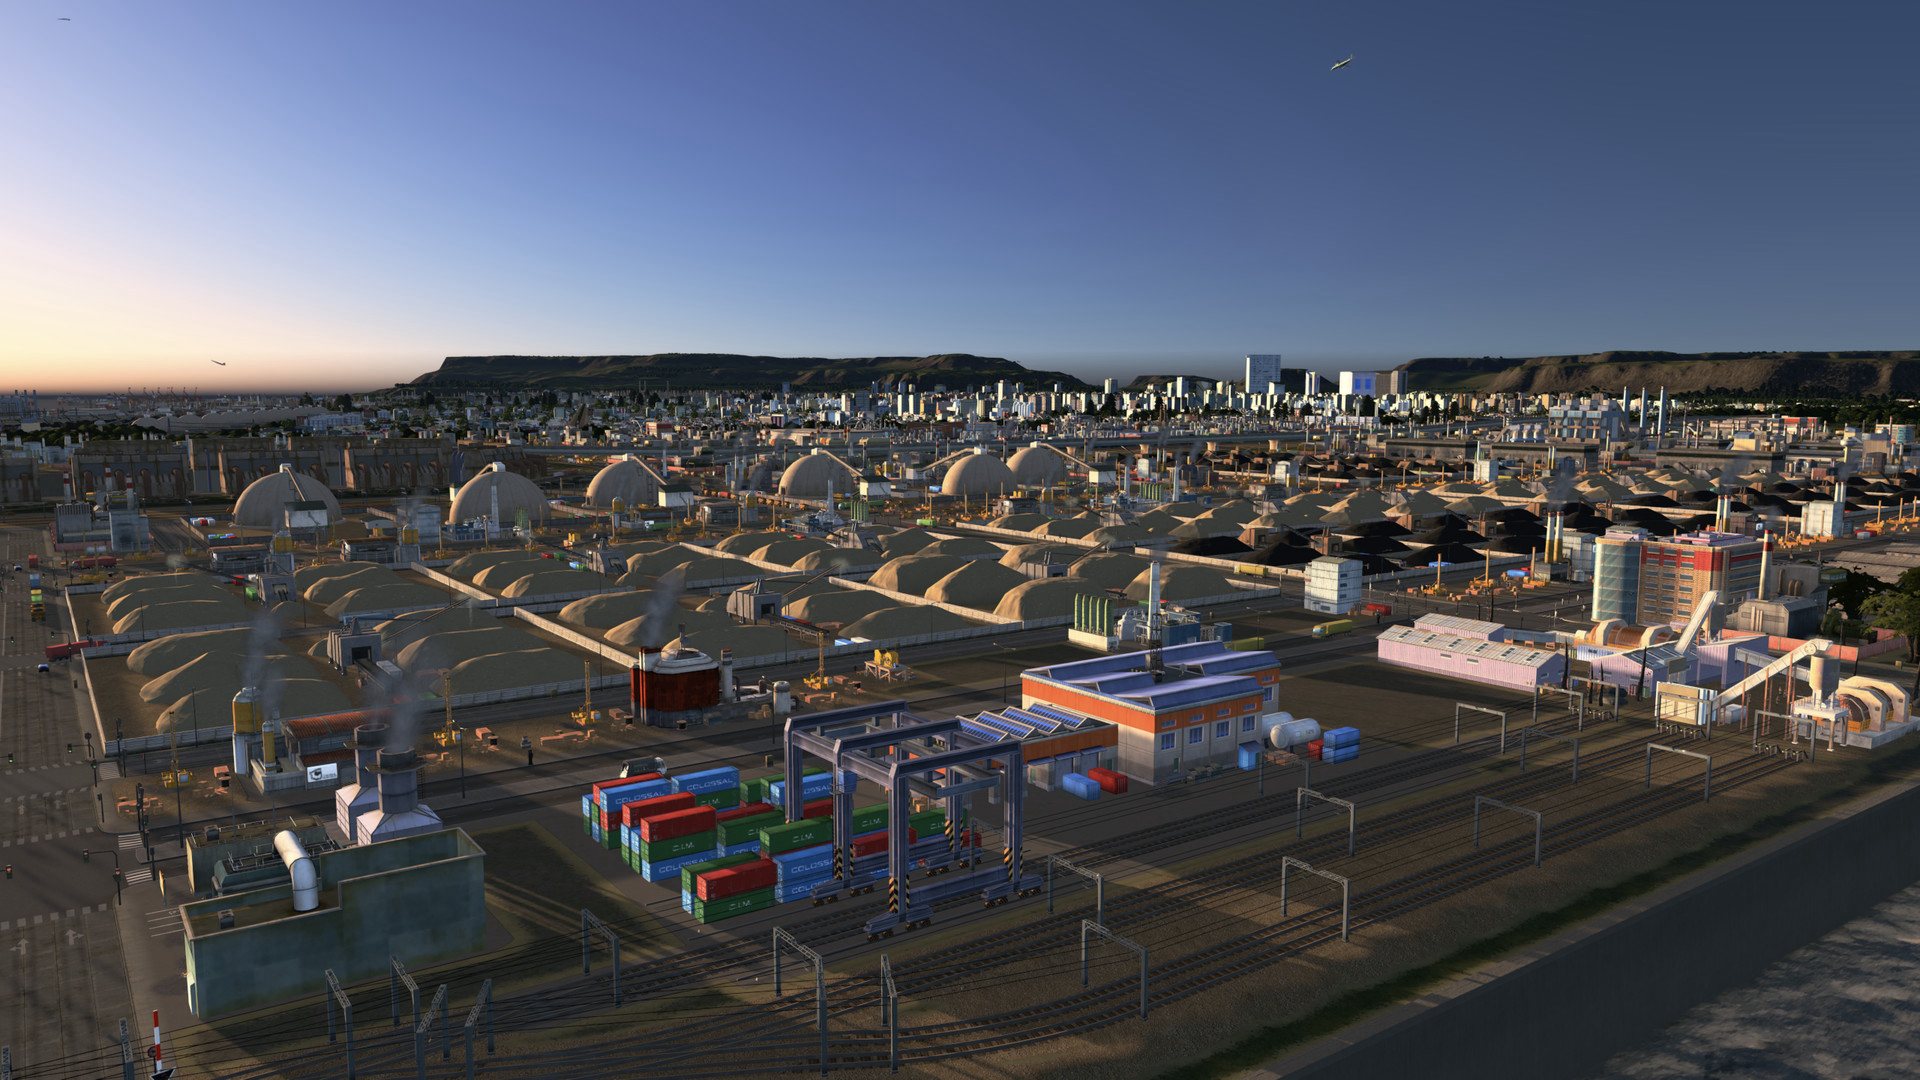 Cities: Skylines - Industries DLC Steam CD Key